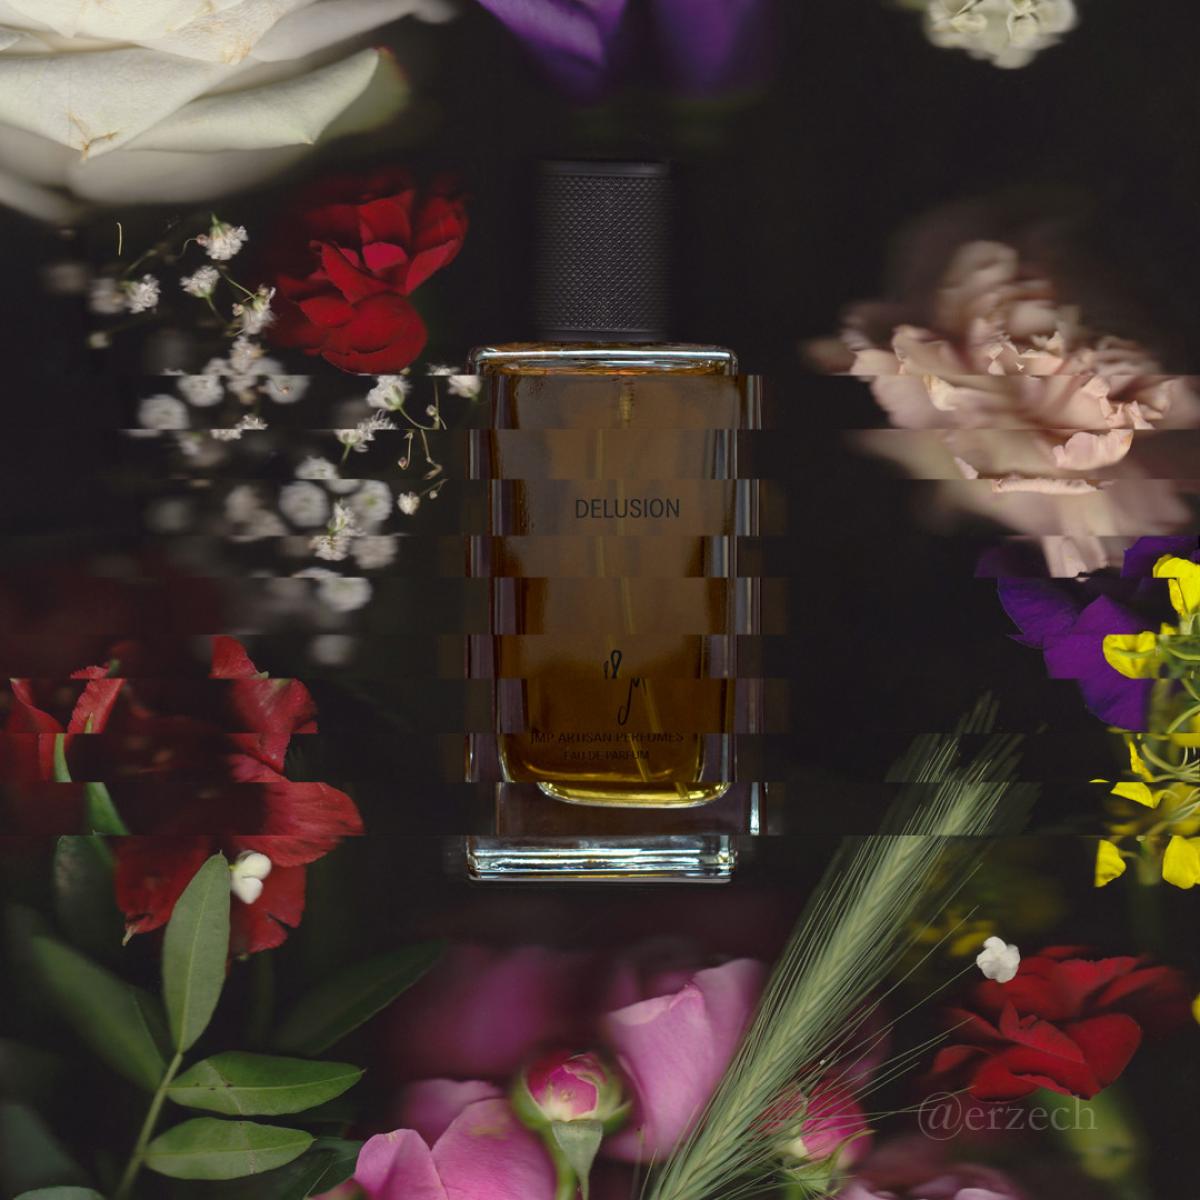 Delusion JMP Artisan Perfumes perfume - a fragrance for women and men 2020